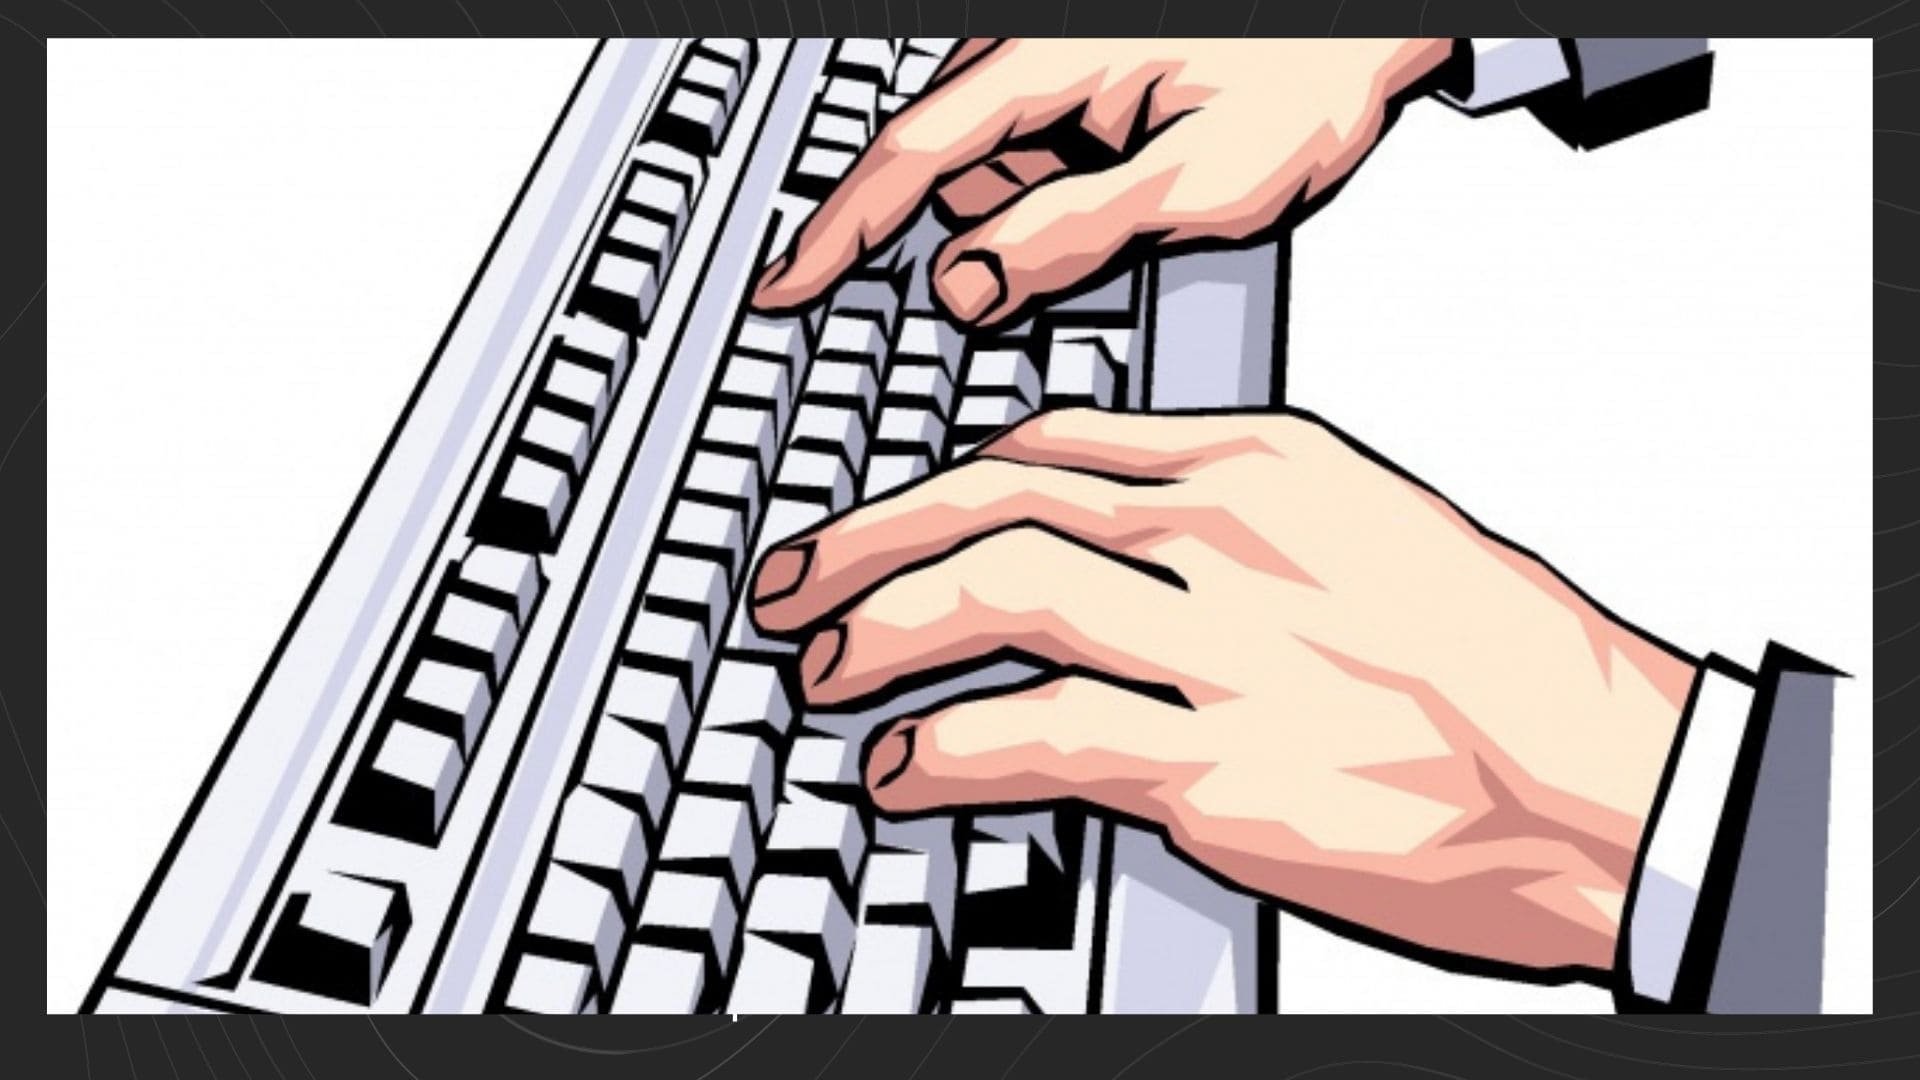 Звук печатает на клавиатуре. Руки на клавиатуре. Печатающий человек. Печатает на компьютере. Набор текста.